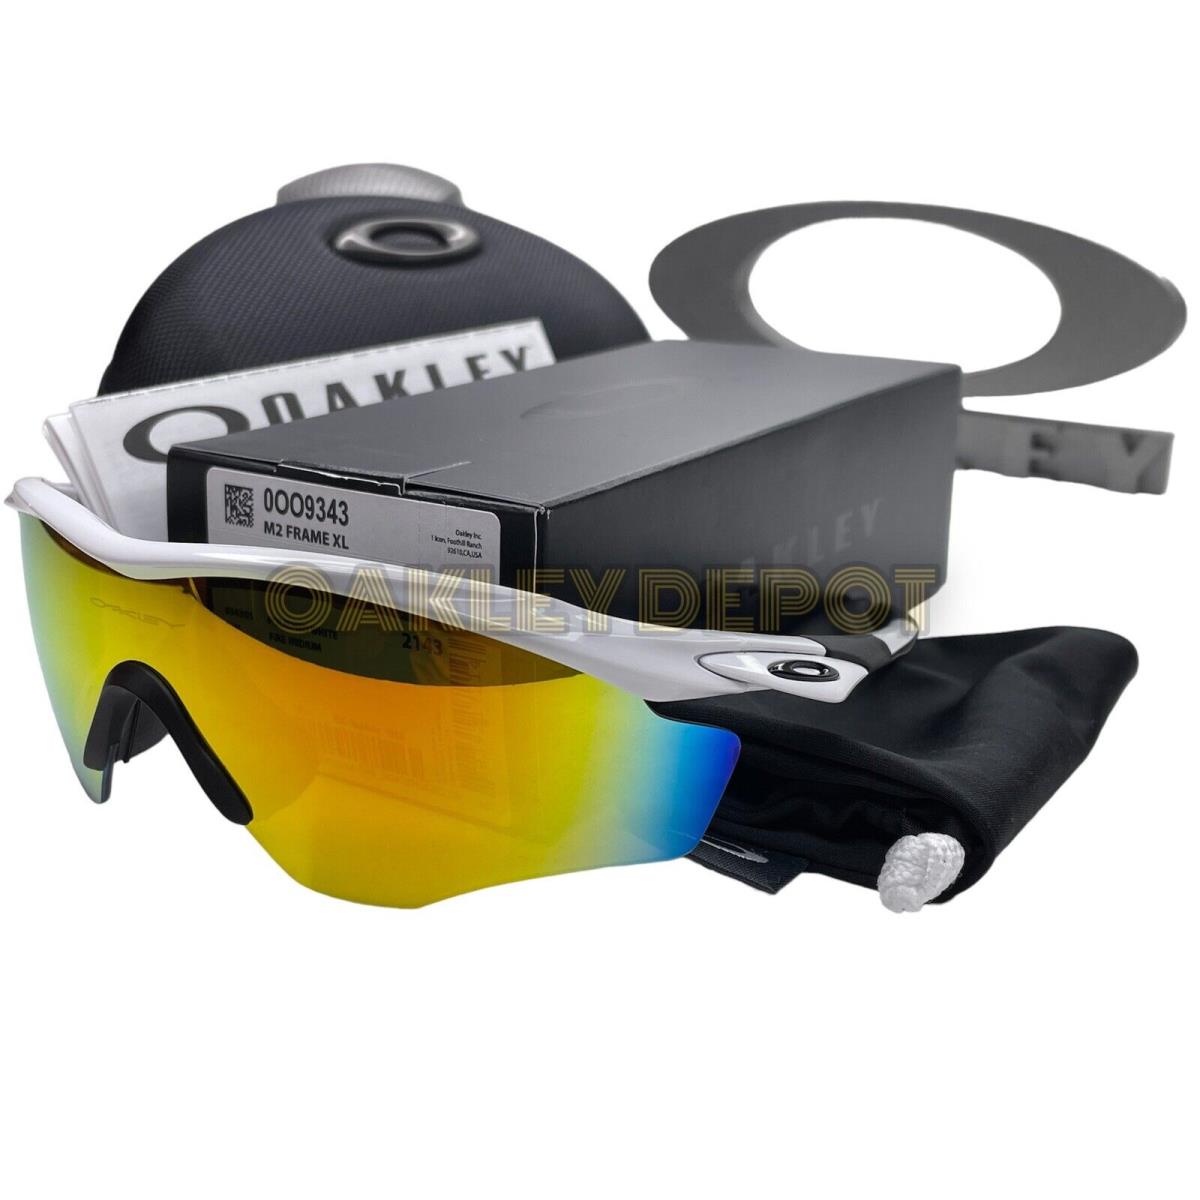 Oakley M2 Frame XL 009343 Polished White/fire Iridium Sunglasses 95 - Frame: POLISHED WHITE, Lens: FIRE